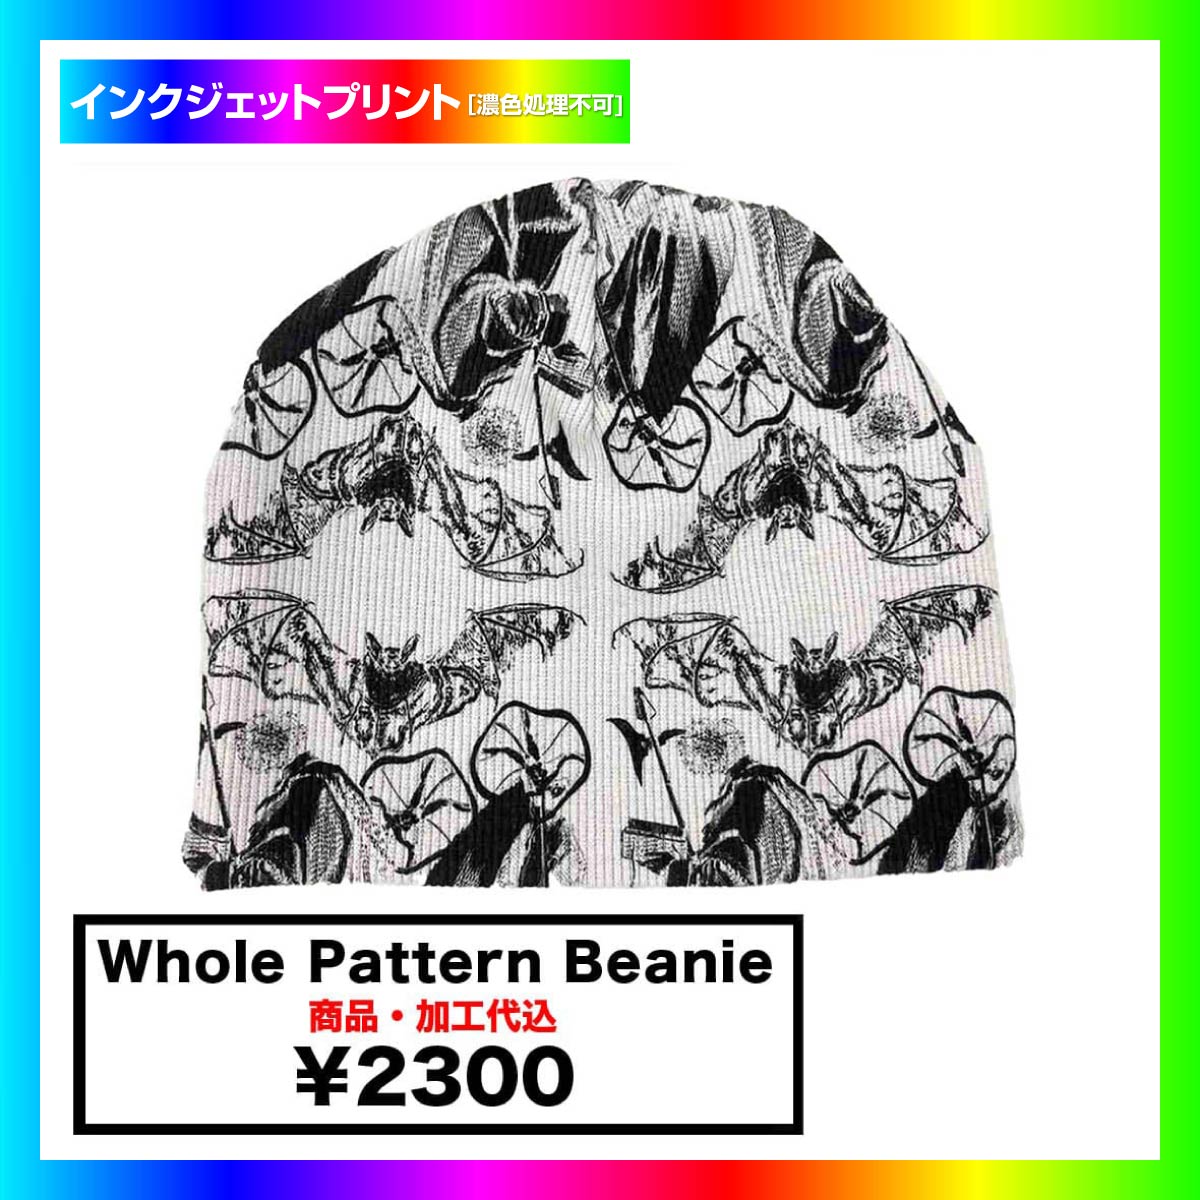 Whole Pattern Beanie (品番CPSEW005)